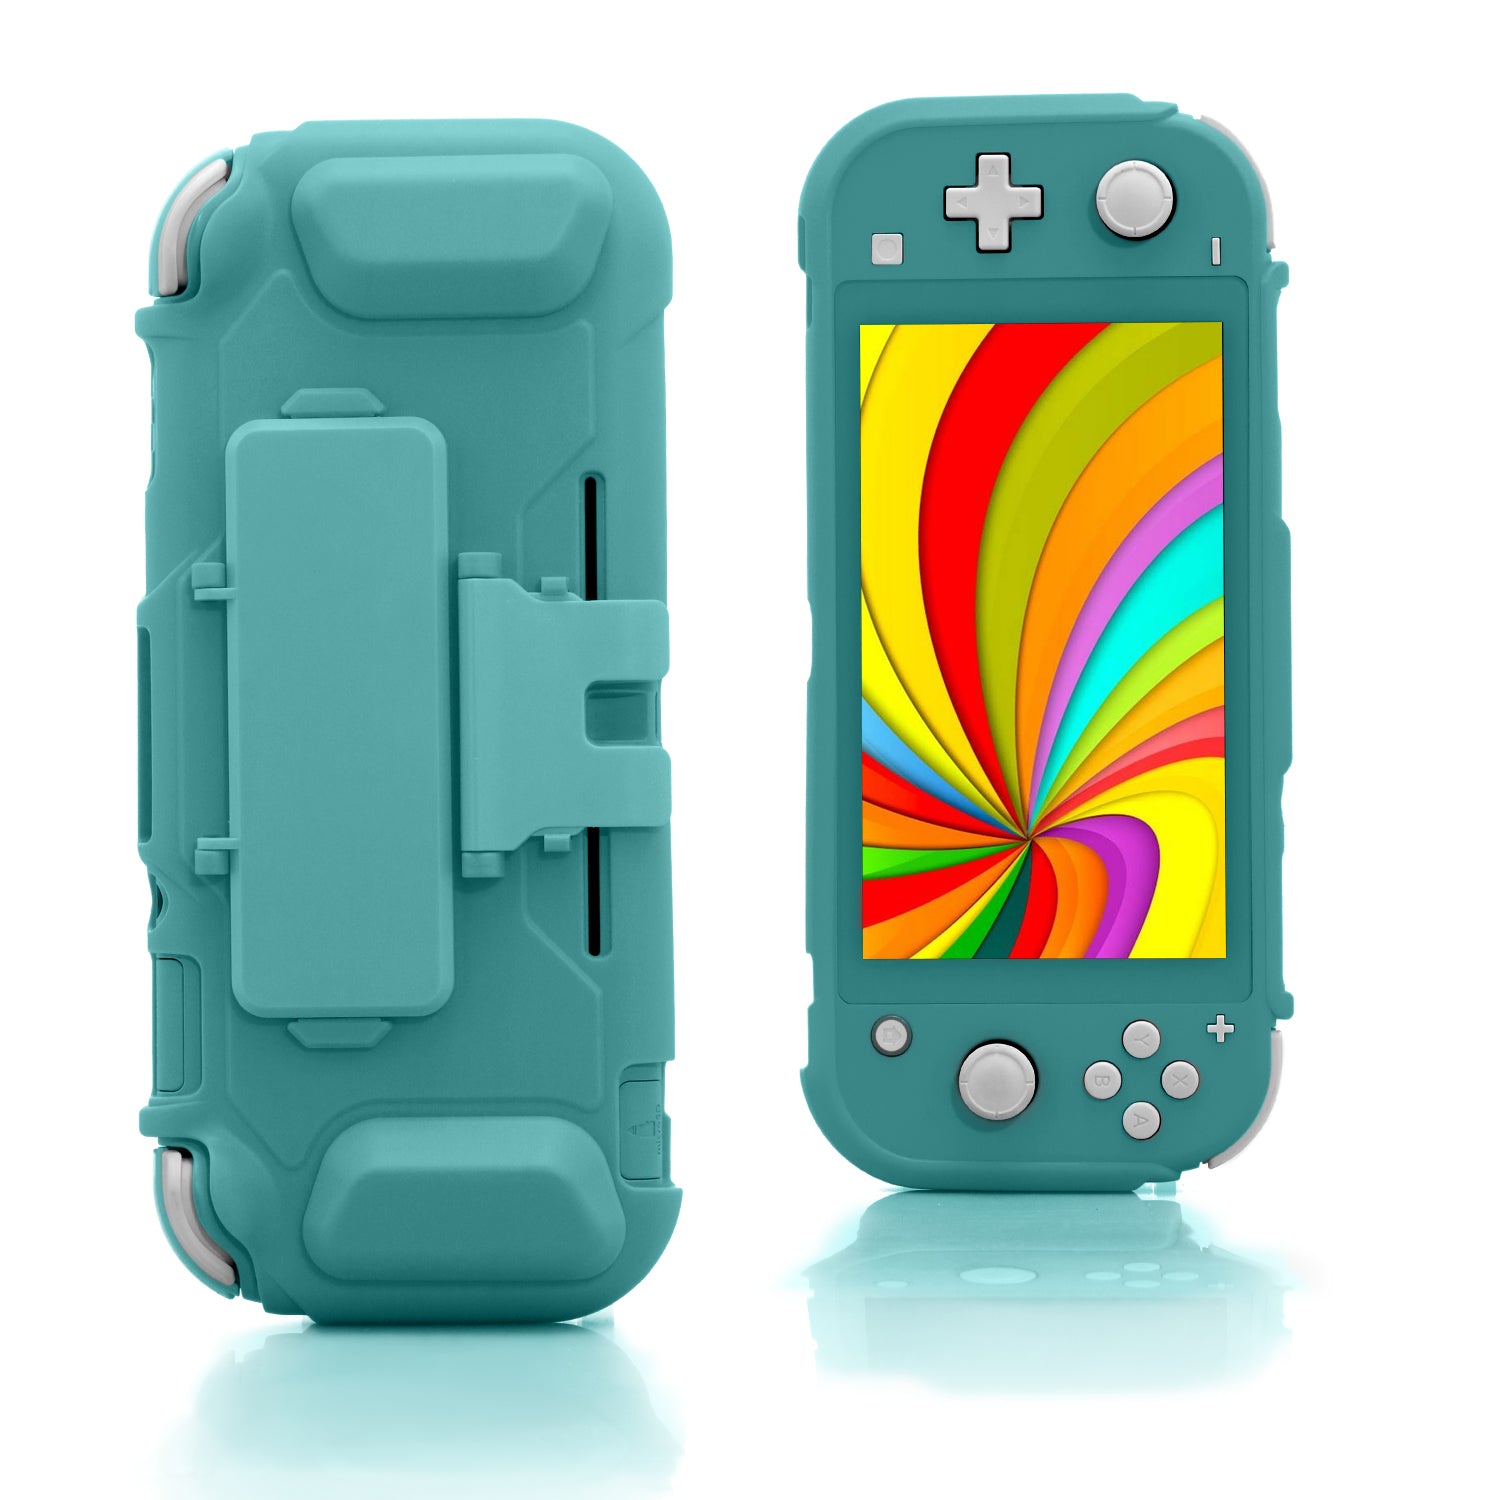 Nintendo Switch Lite Case